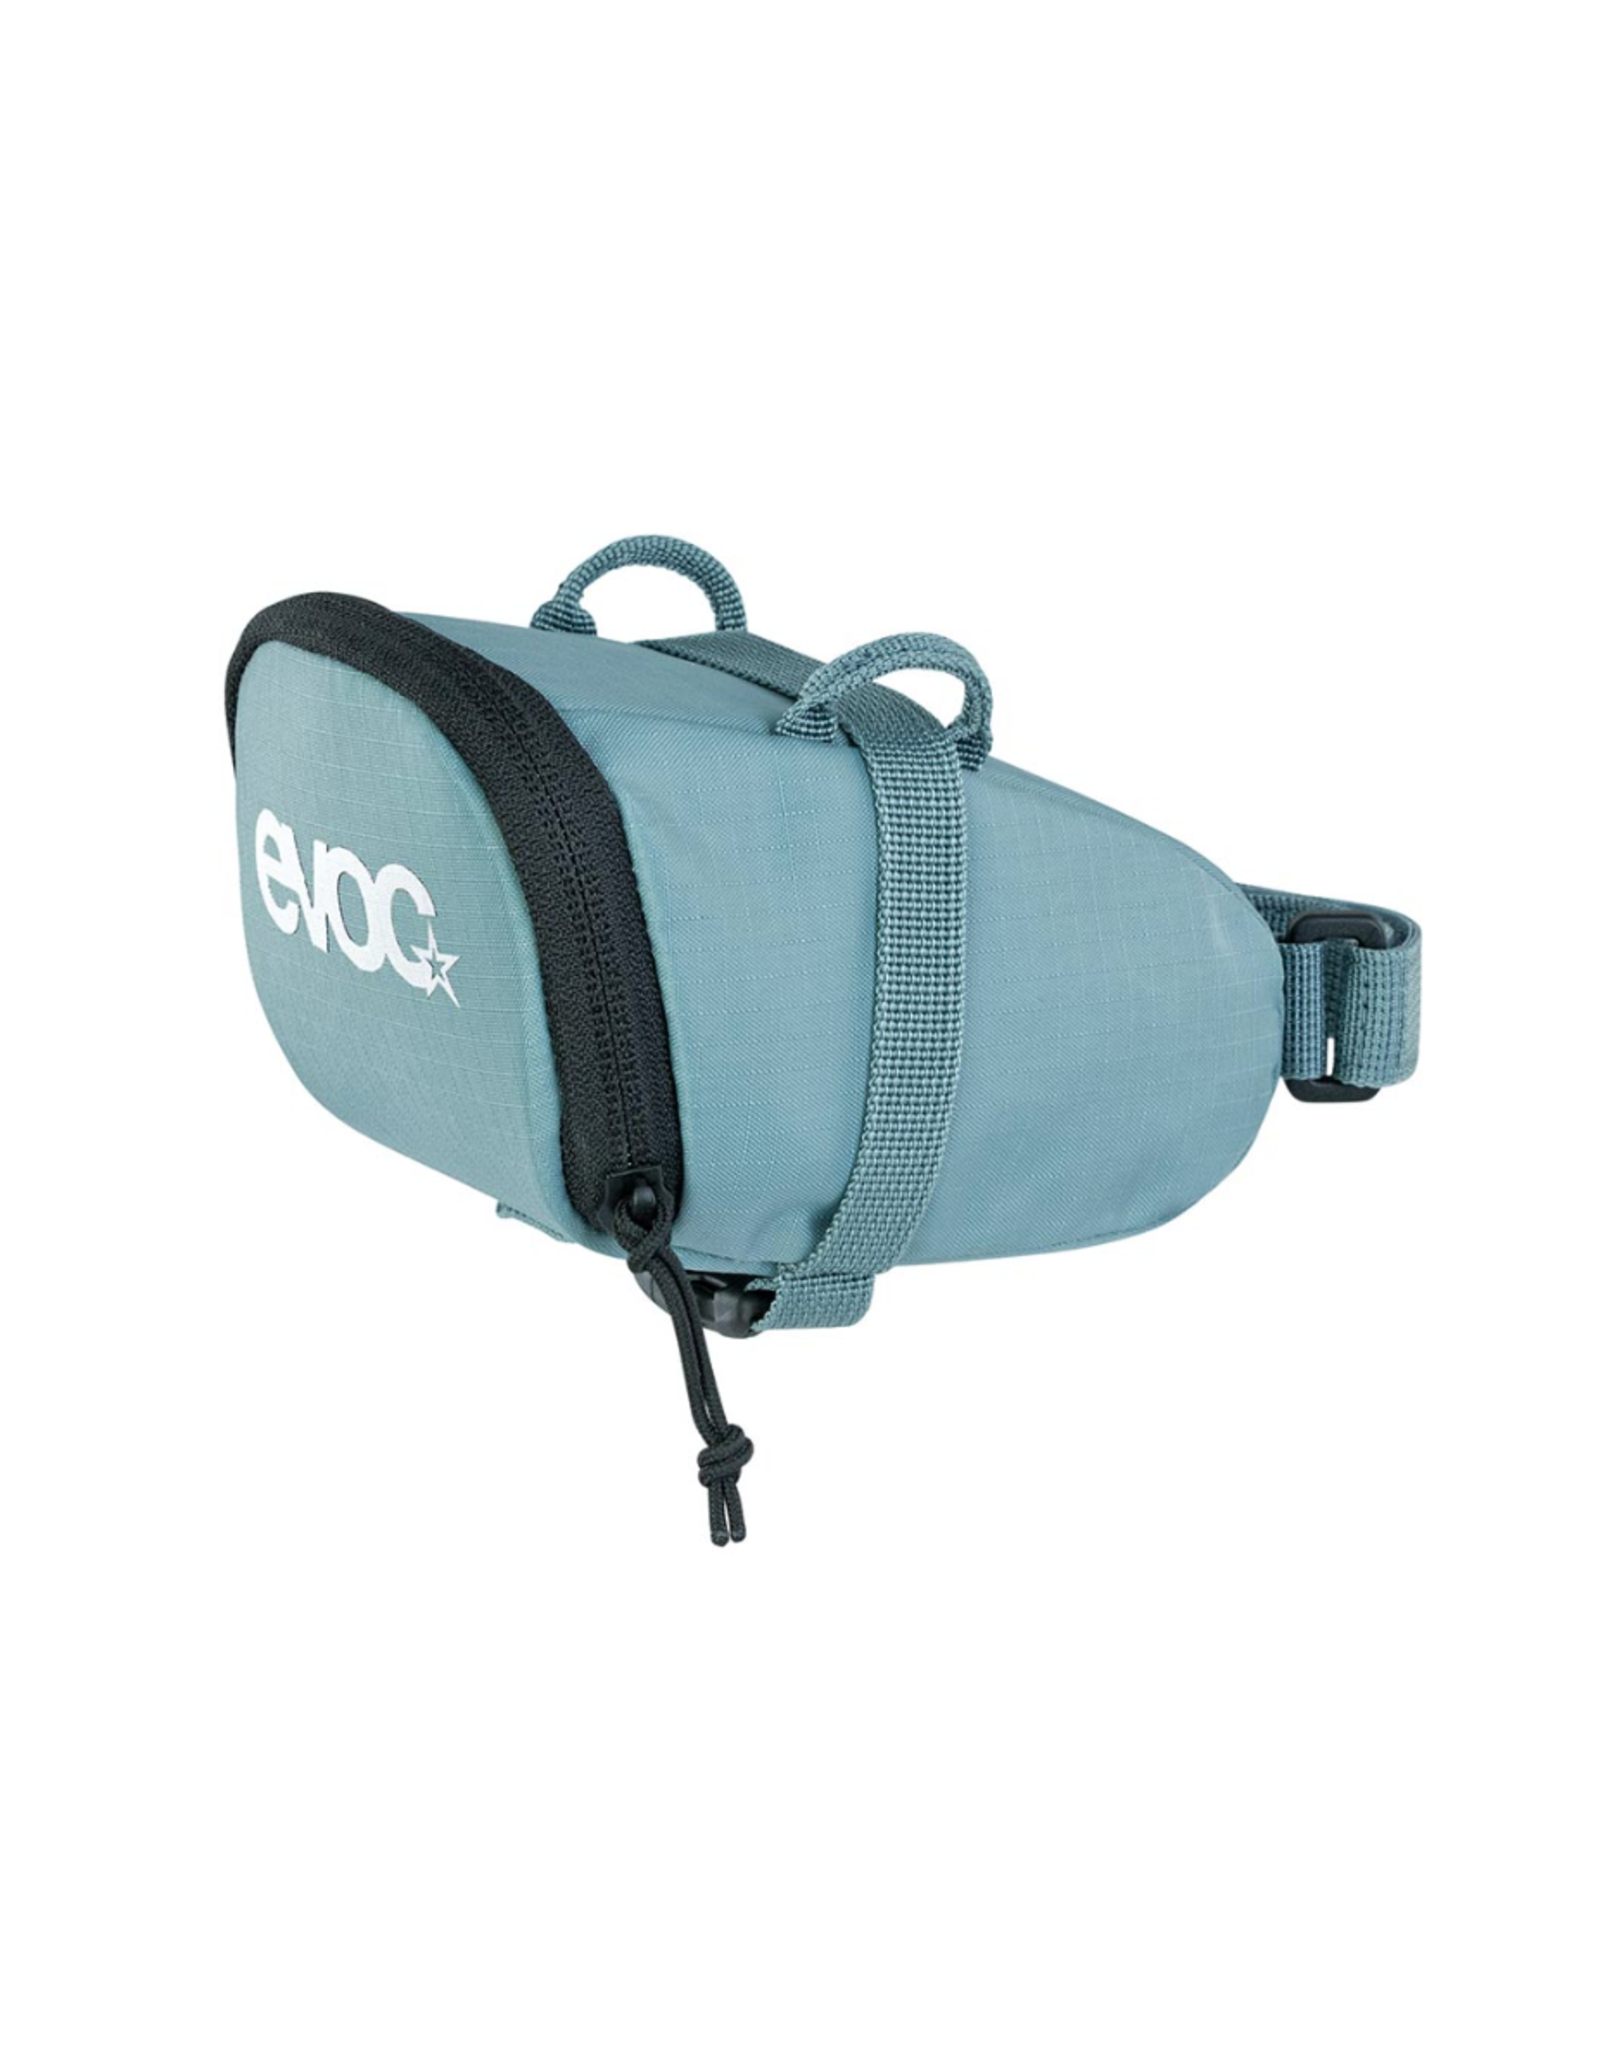 EVOC EVOC, Seat Bag M, Seat Bag, 0.7L